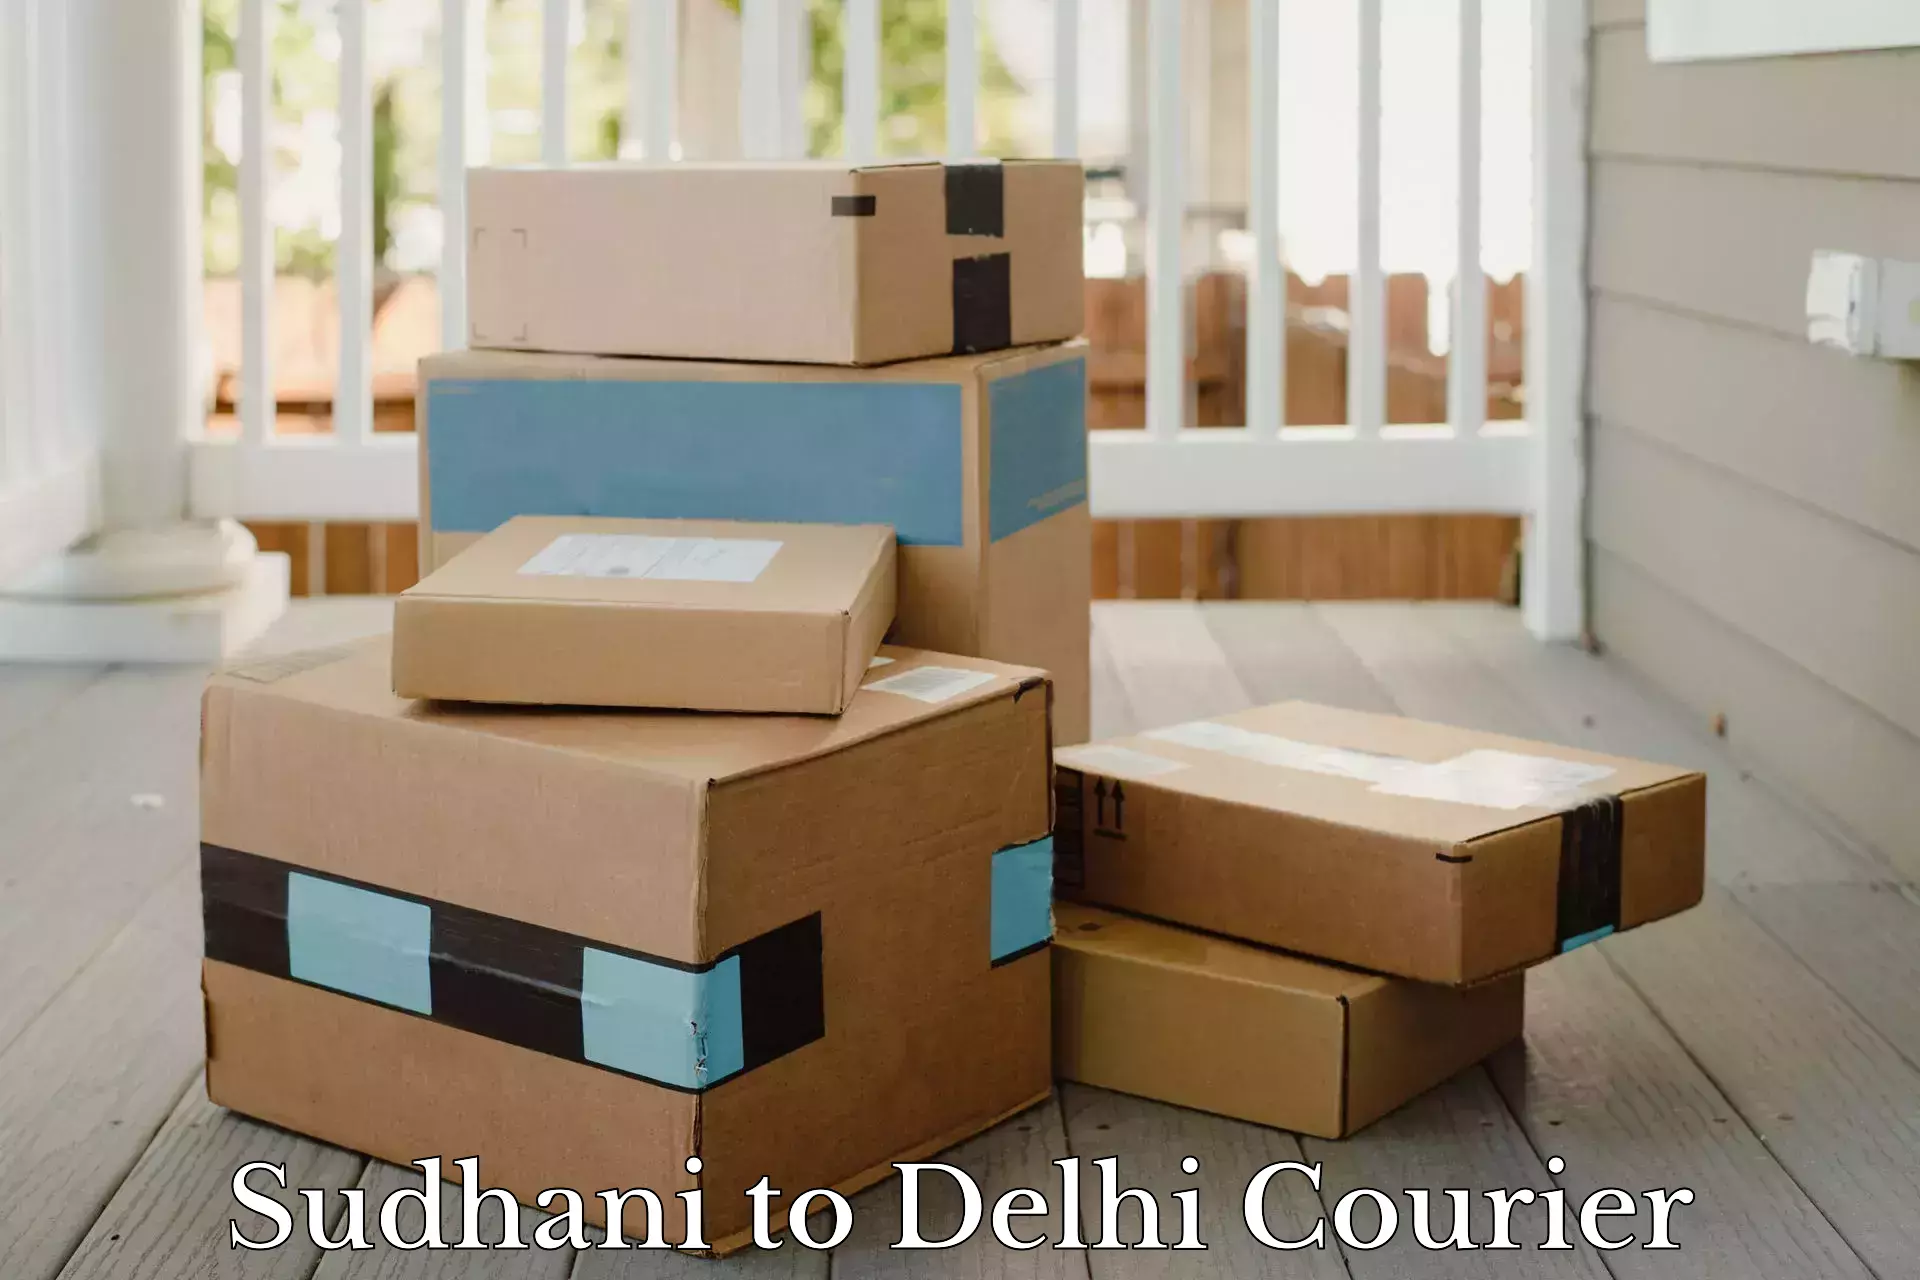 Cash on delivery service Sudhani to Delhi